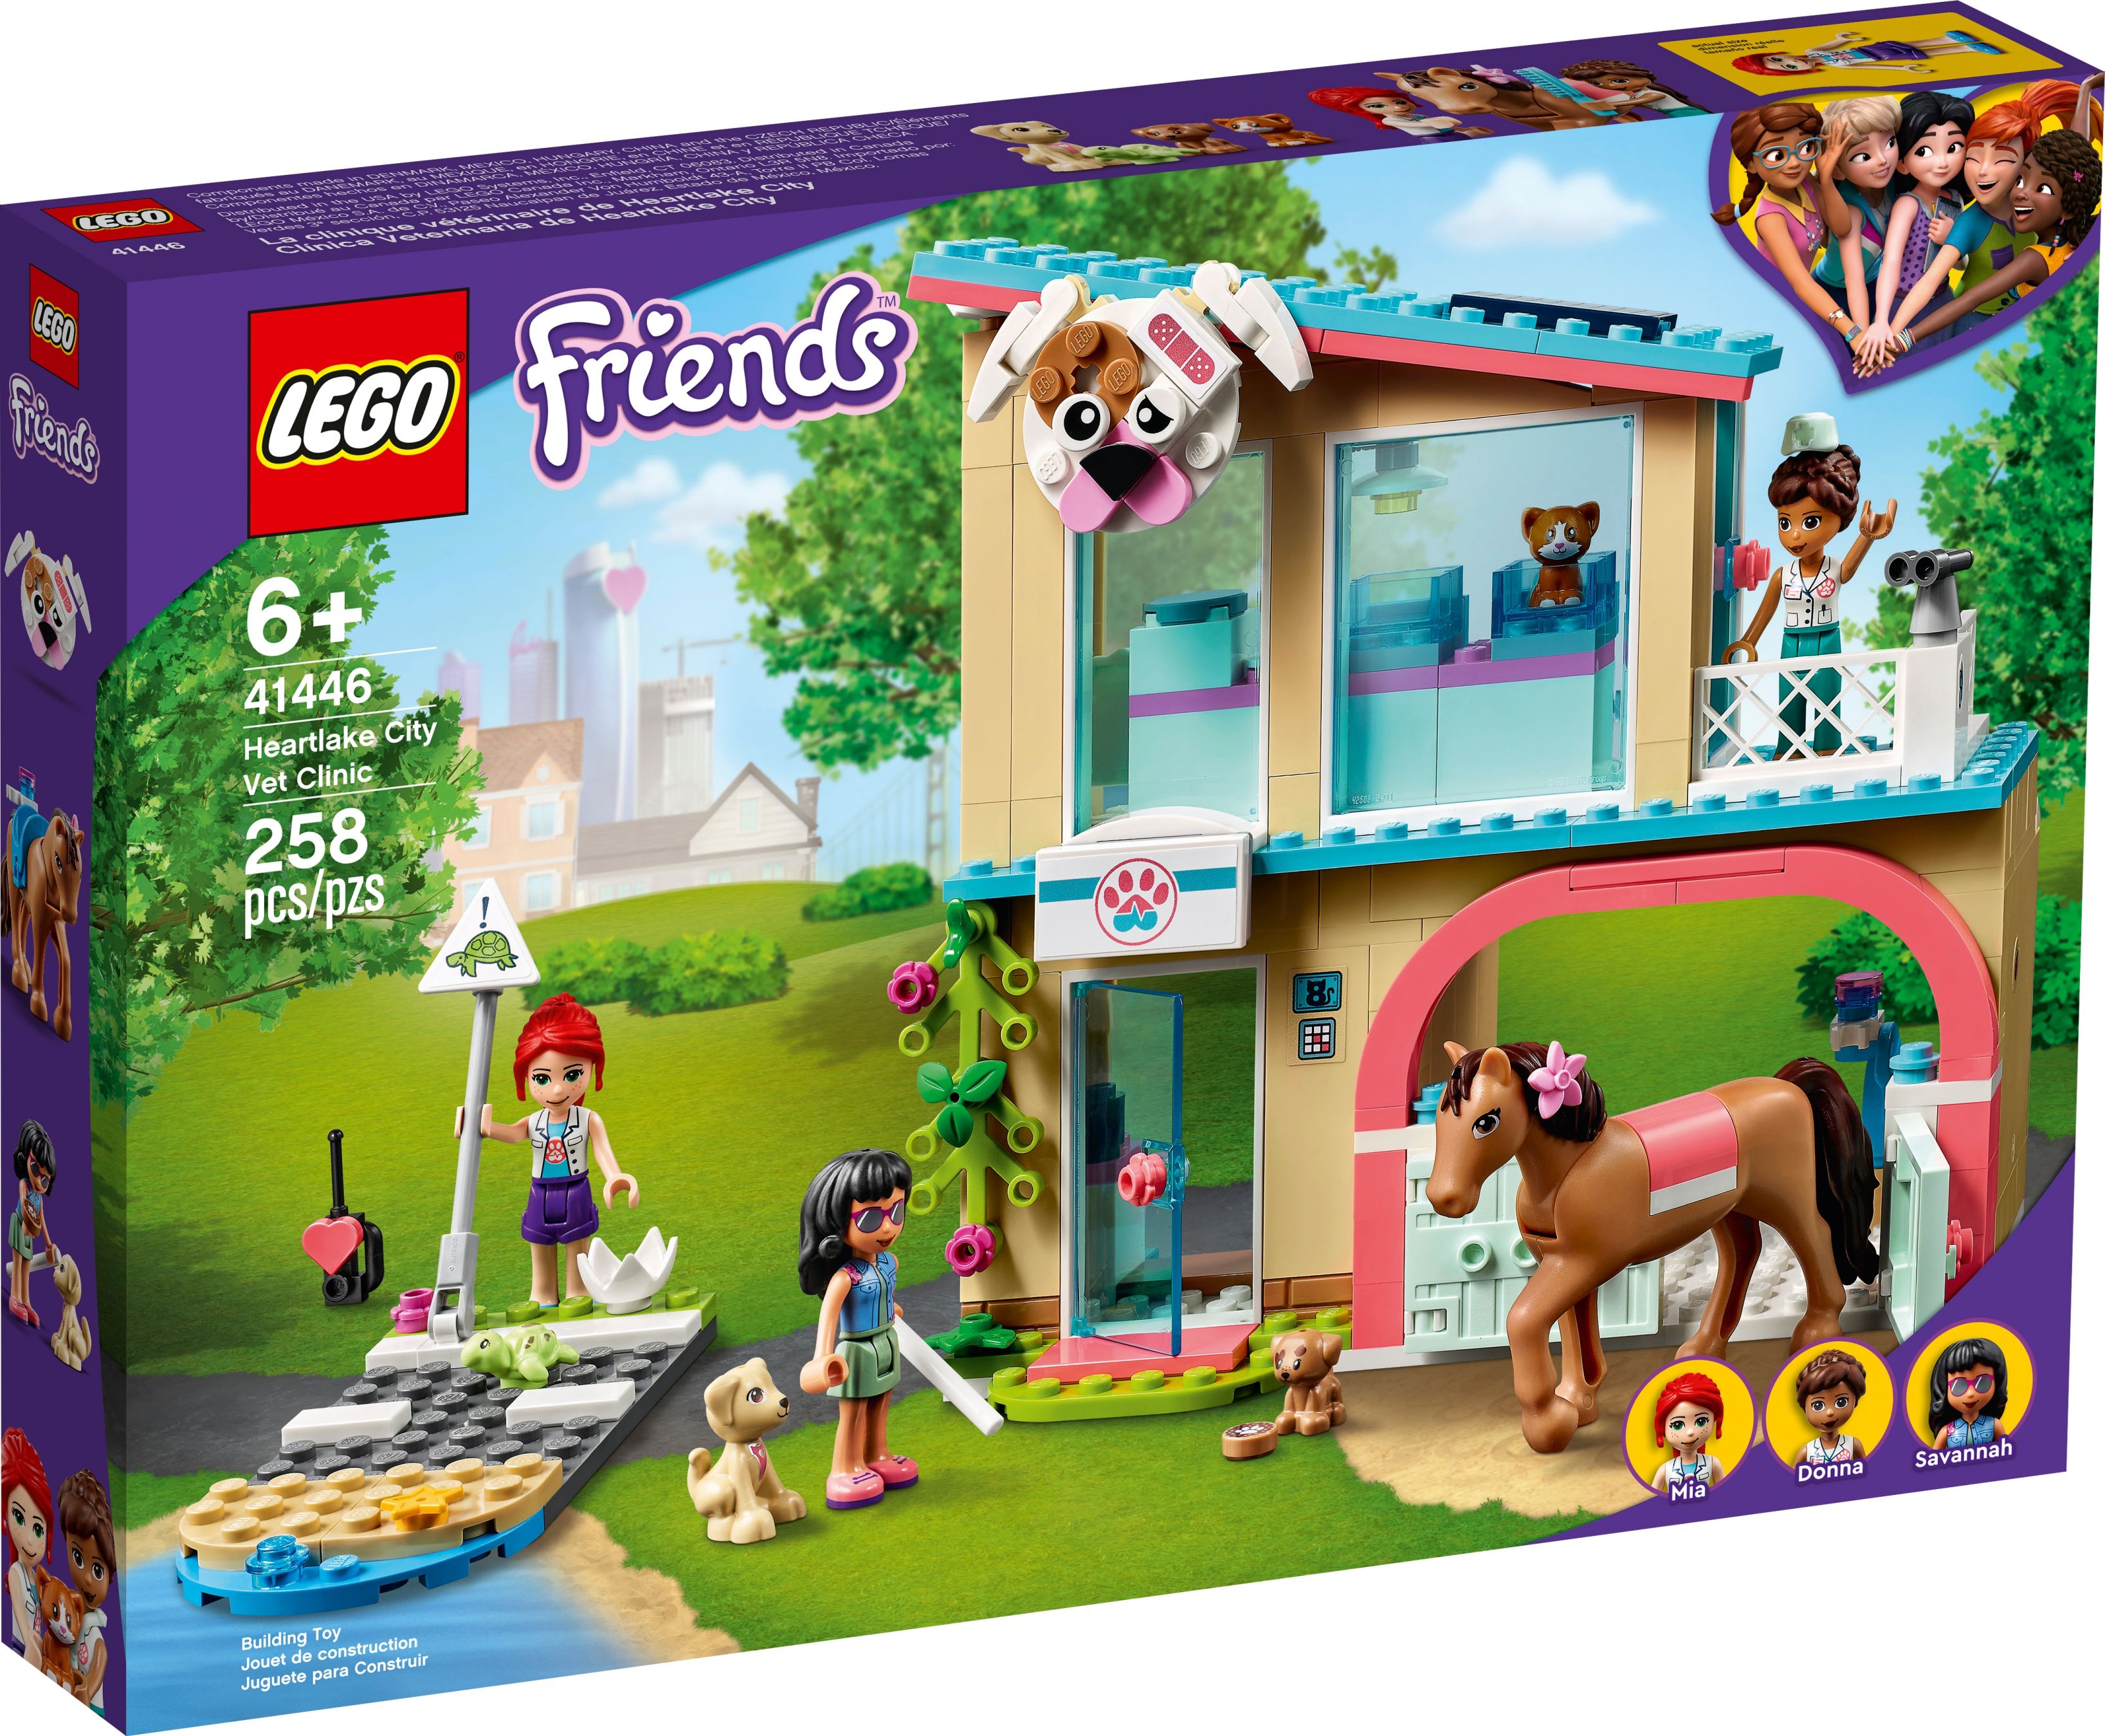 LEGO Friends 41446 Heartlake City Tierklinik LEGO_41446_box1_v39.jpg